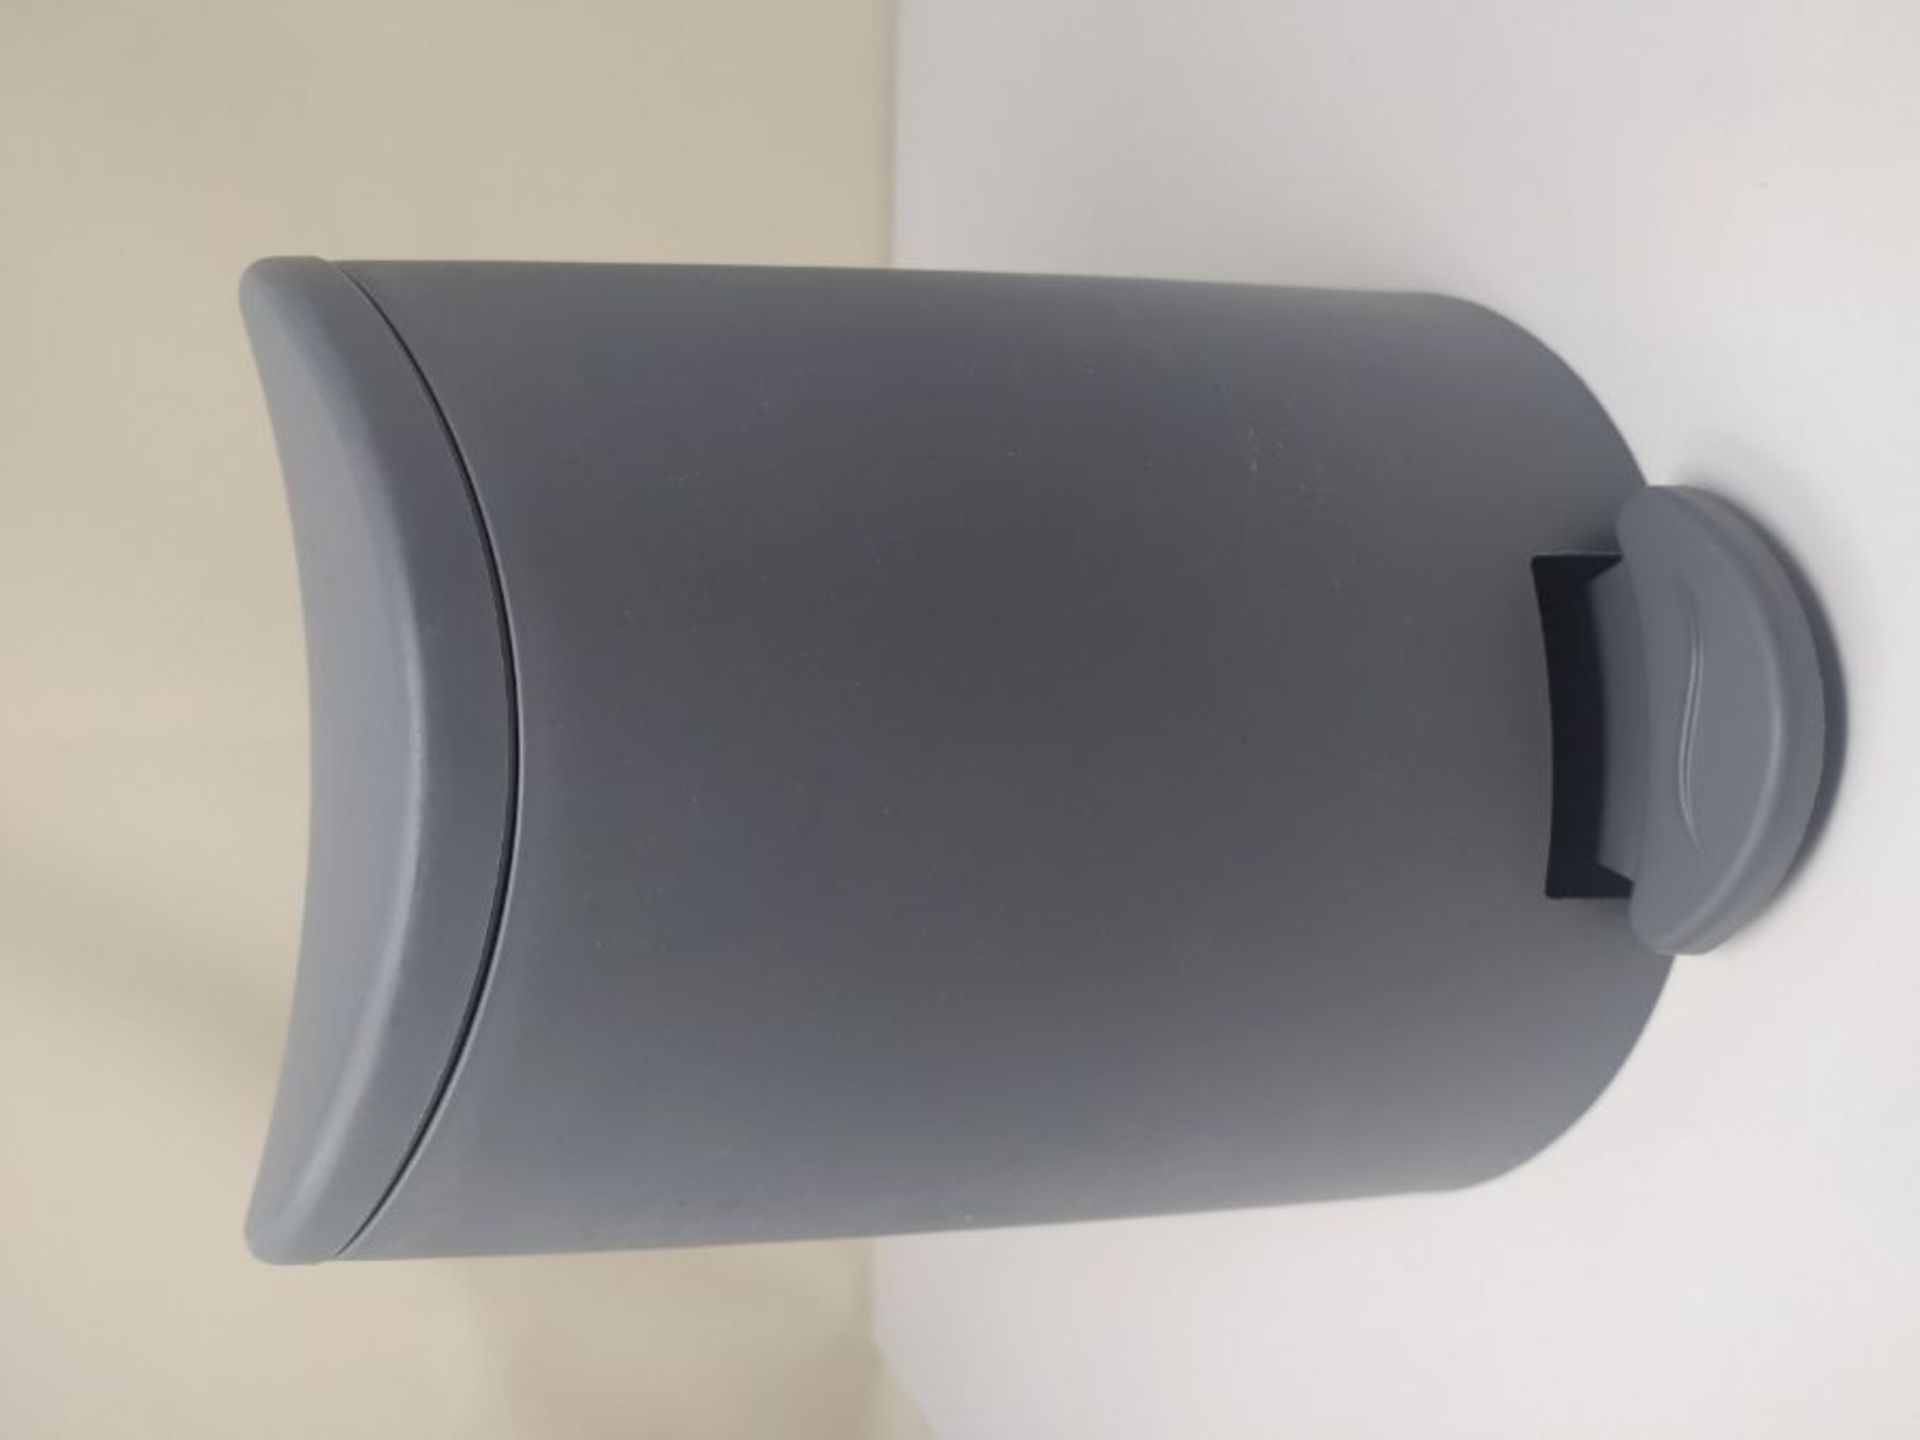 Tatay Standard Bathroom Pedal Bin, 3L, Grey, One Size - Image 2 of 2